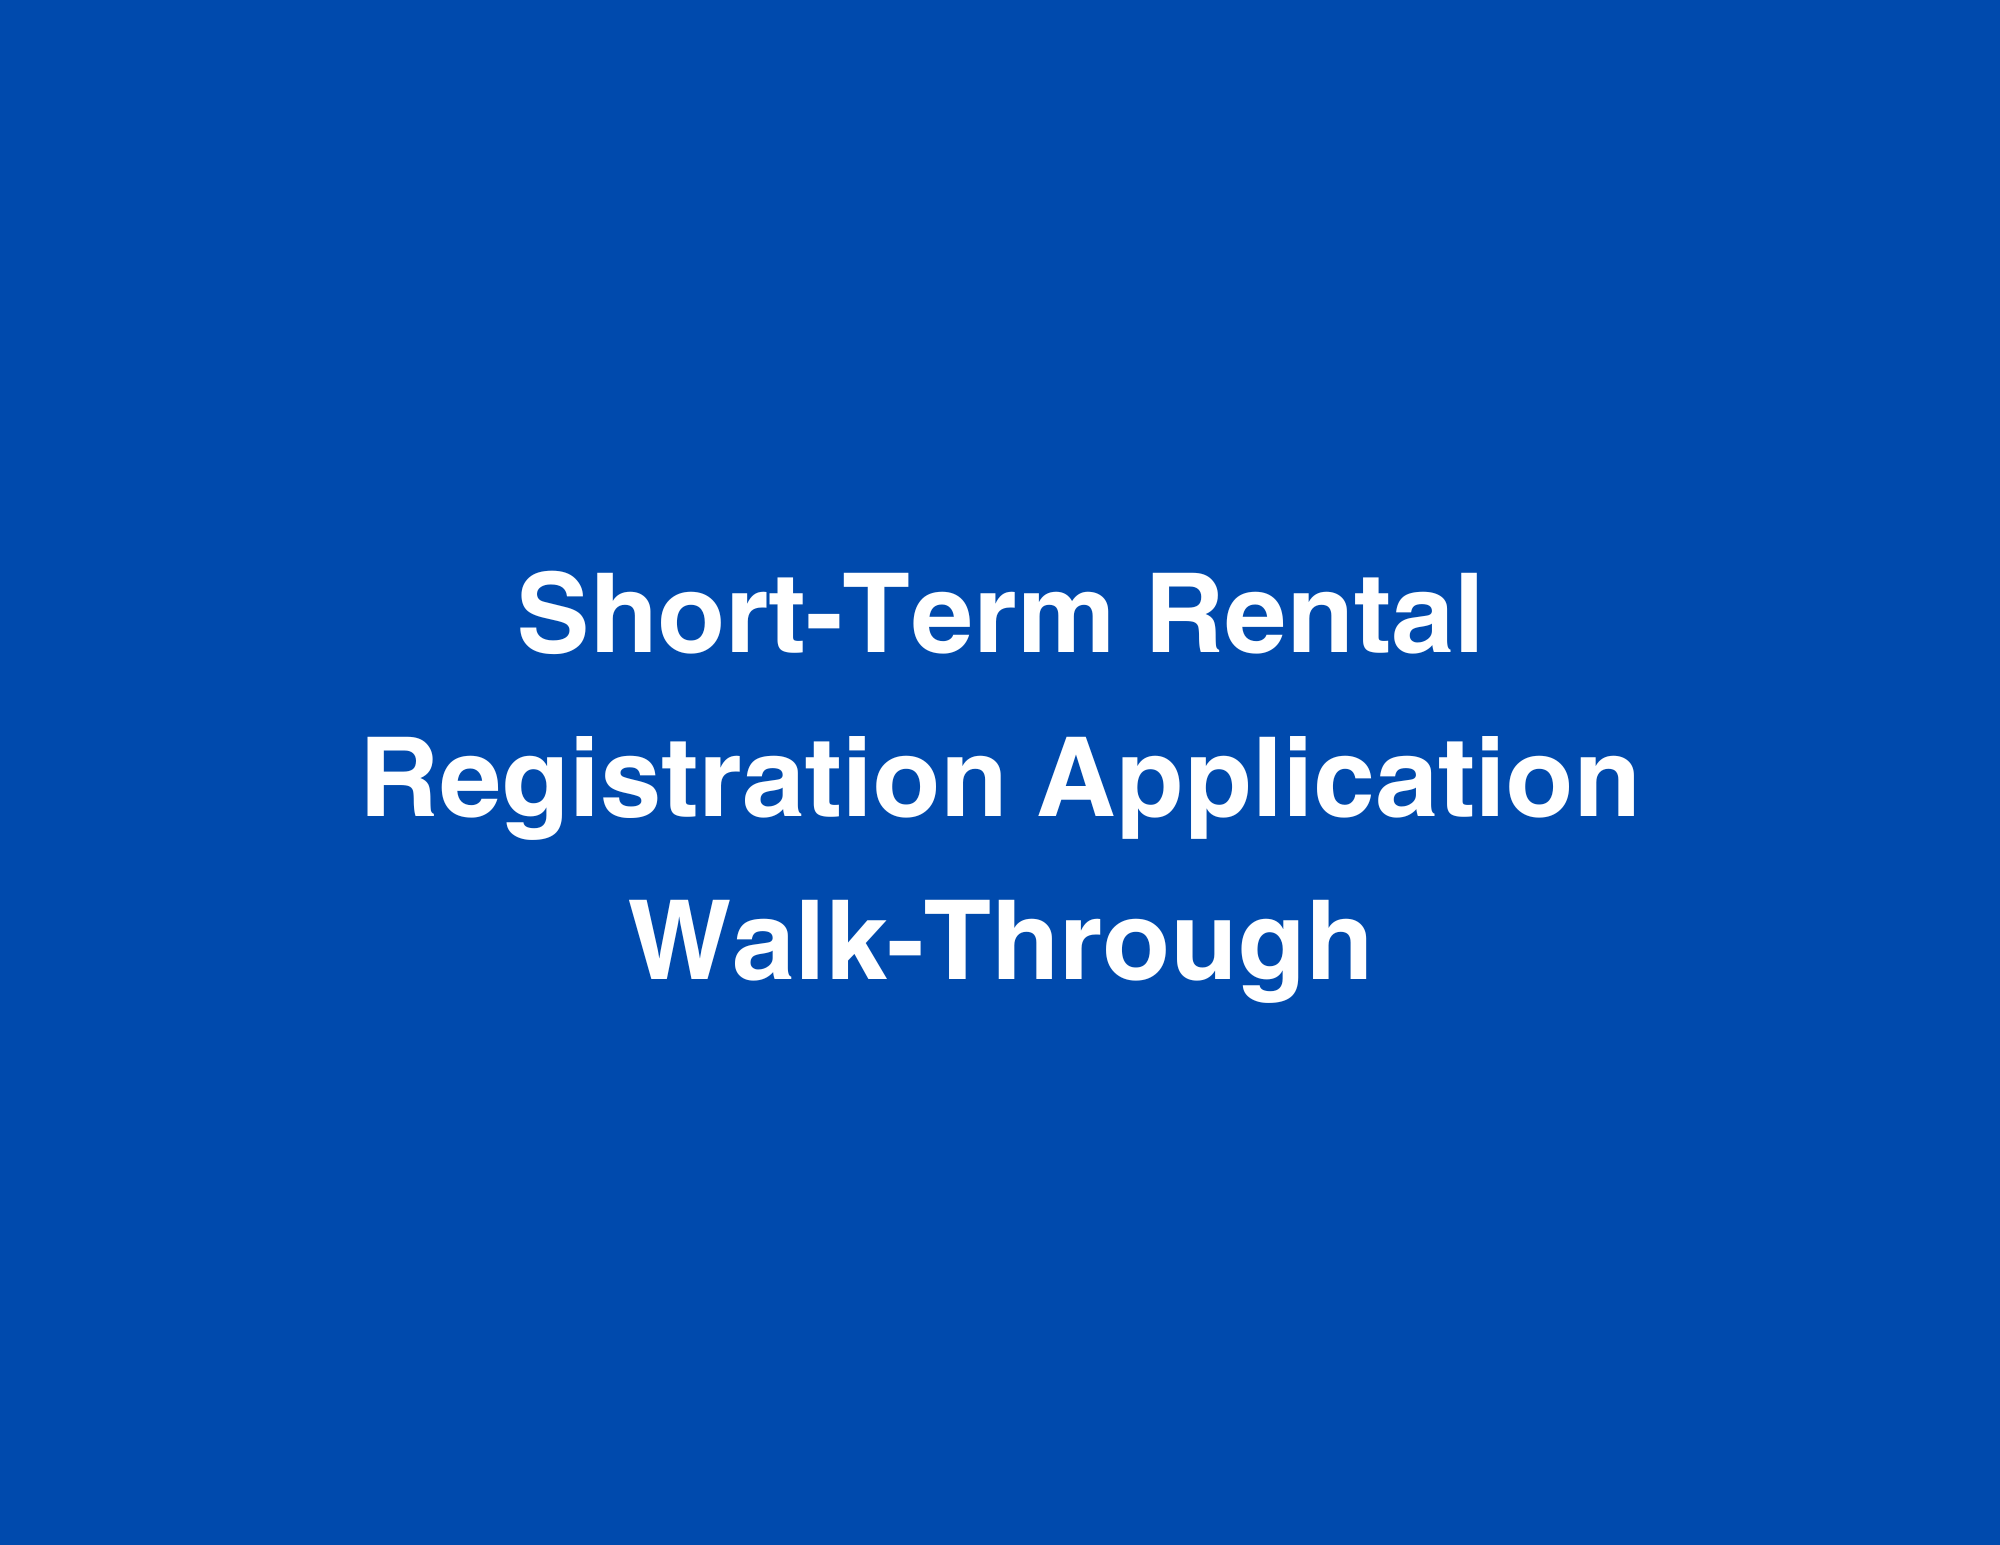 Short-Term Rental Registration Application Walk-Through